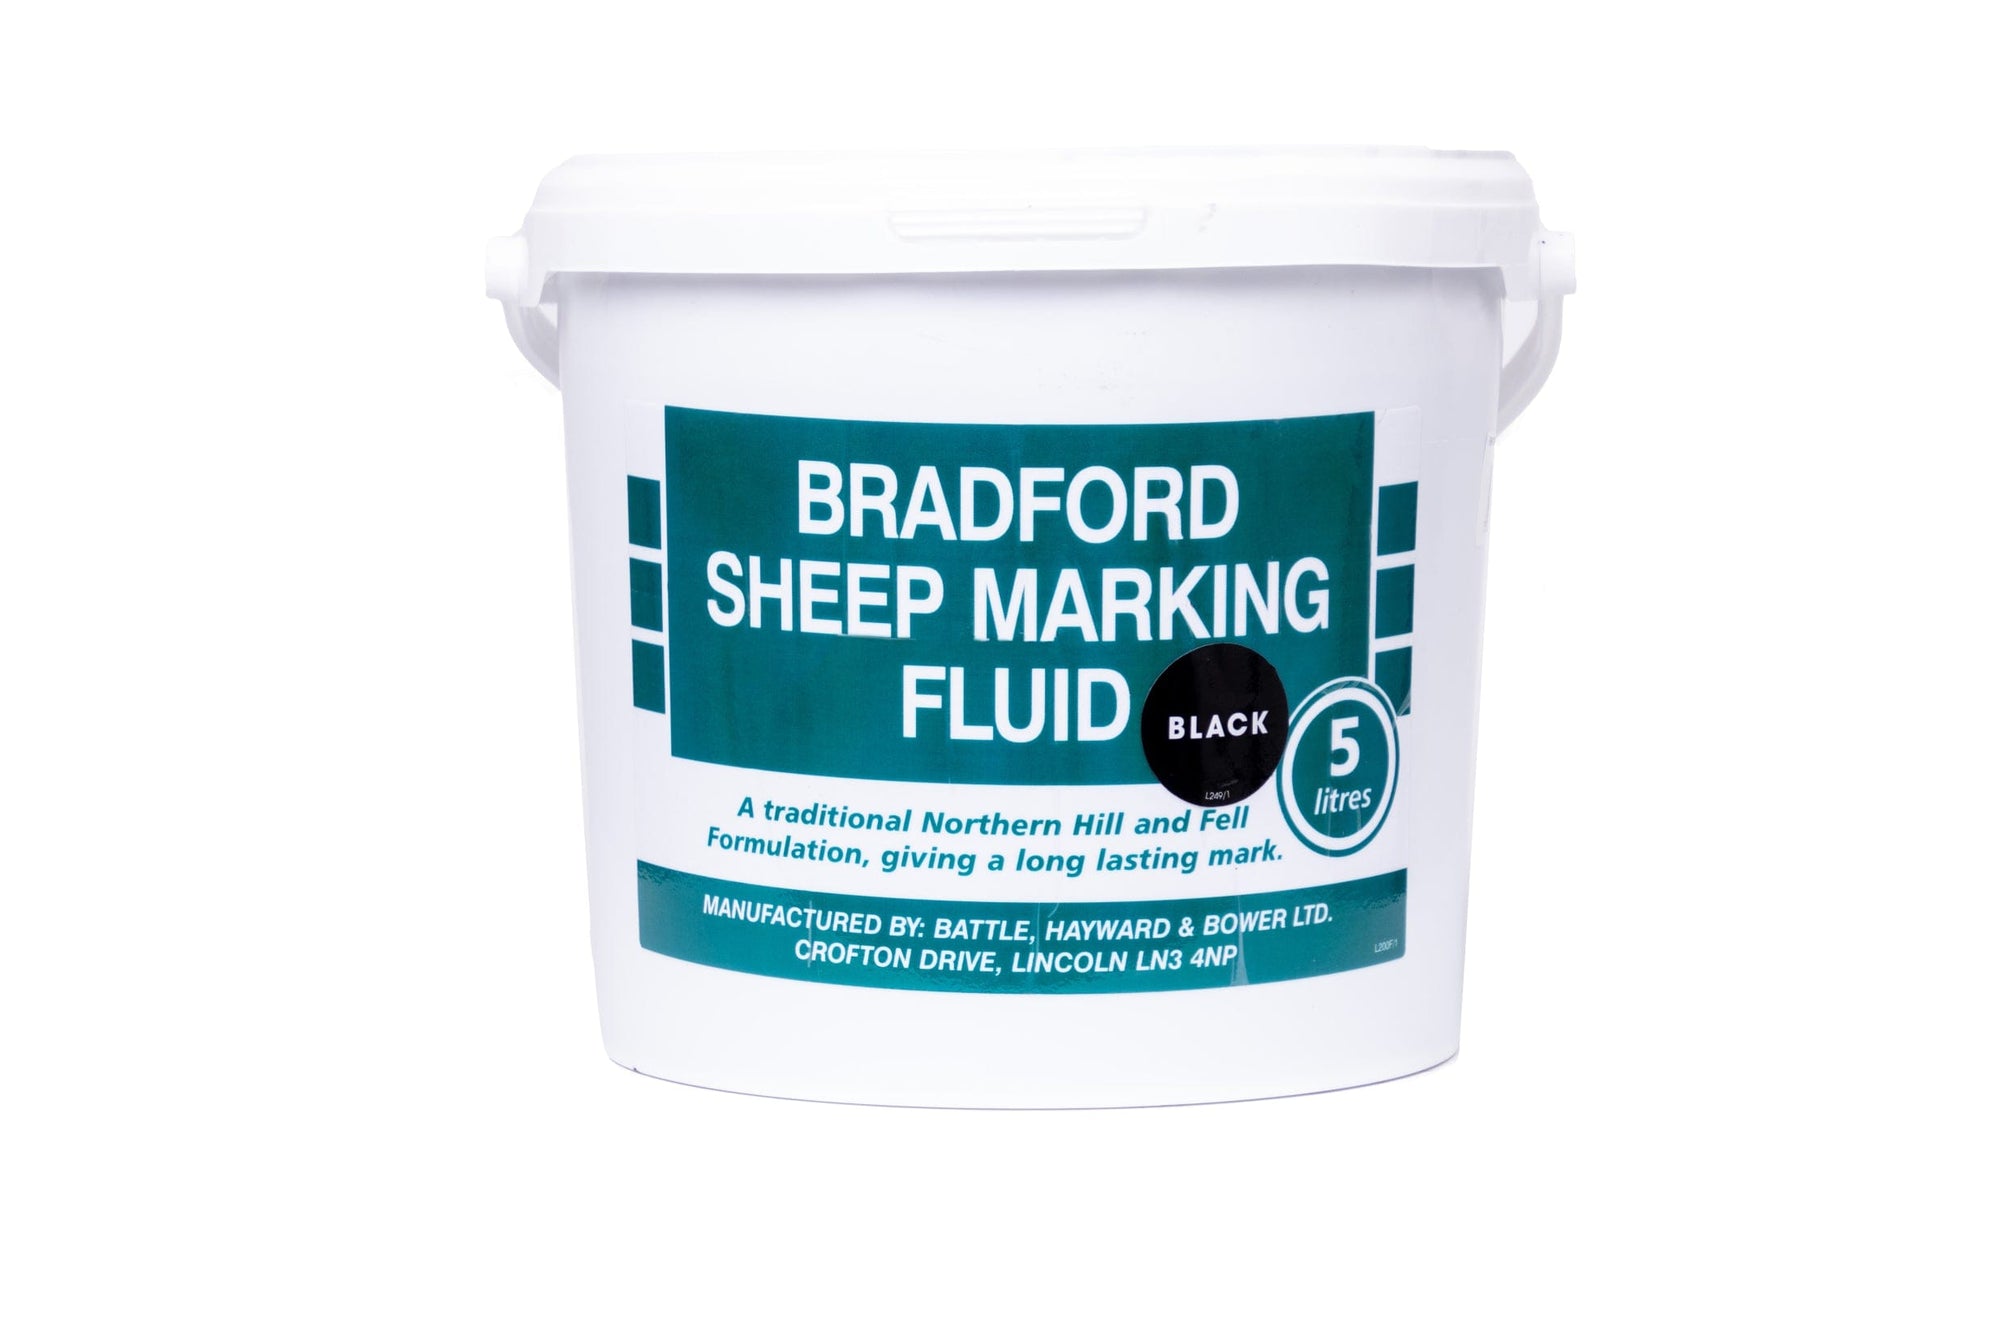 Bradford sheep marking fluid